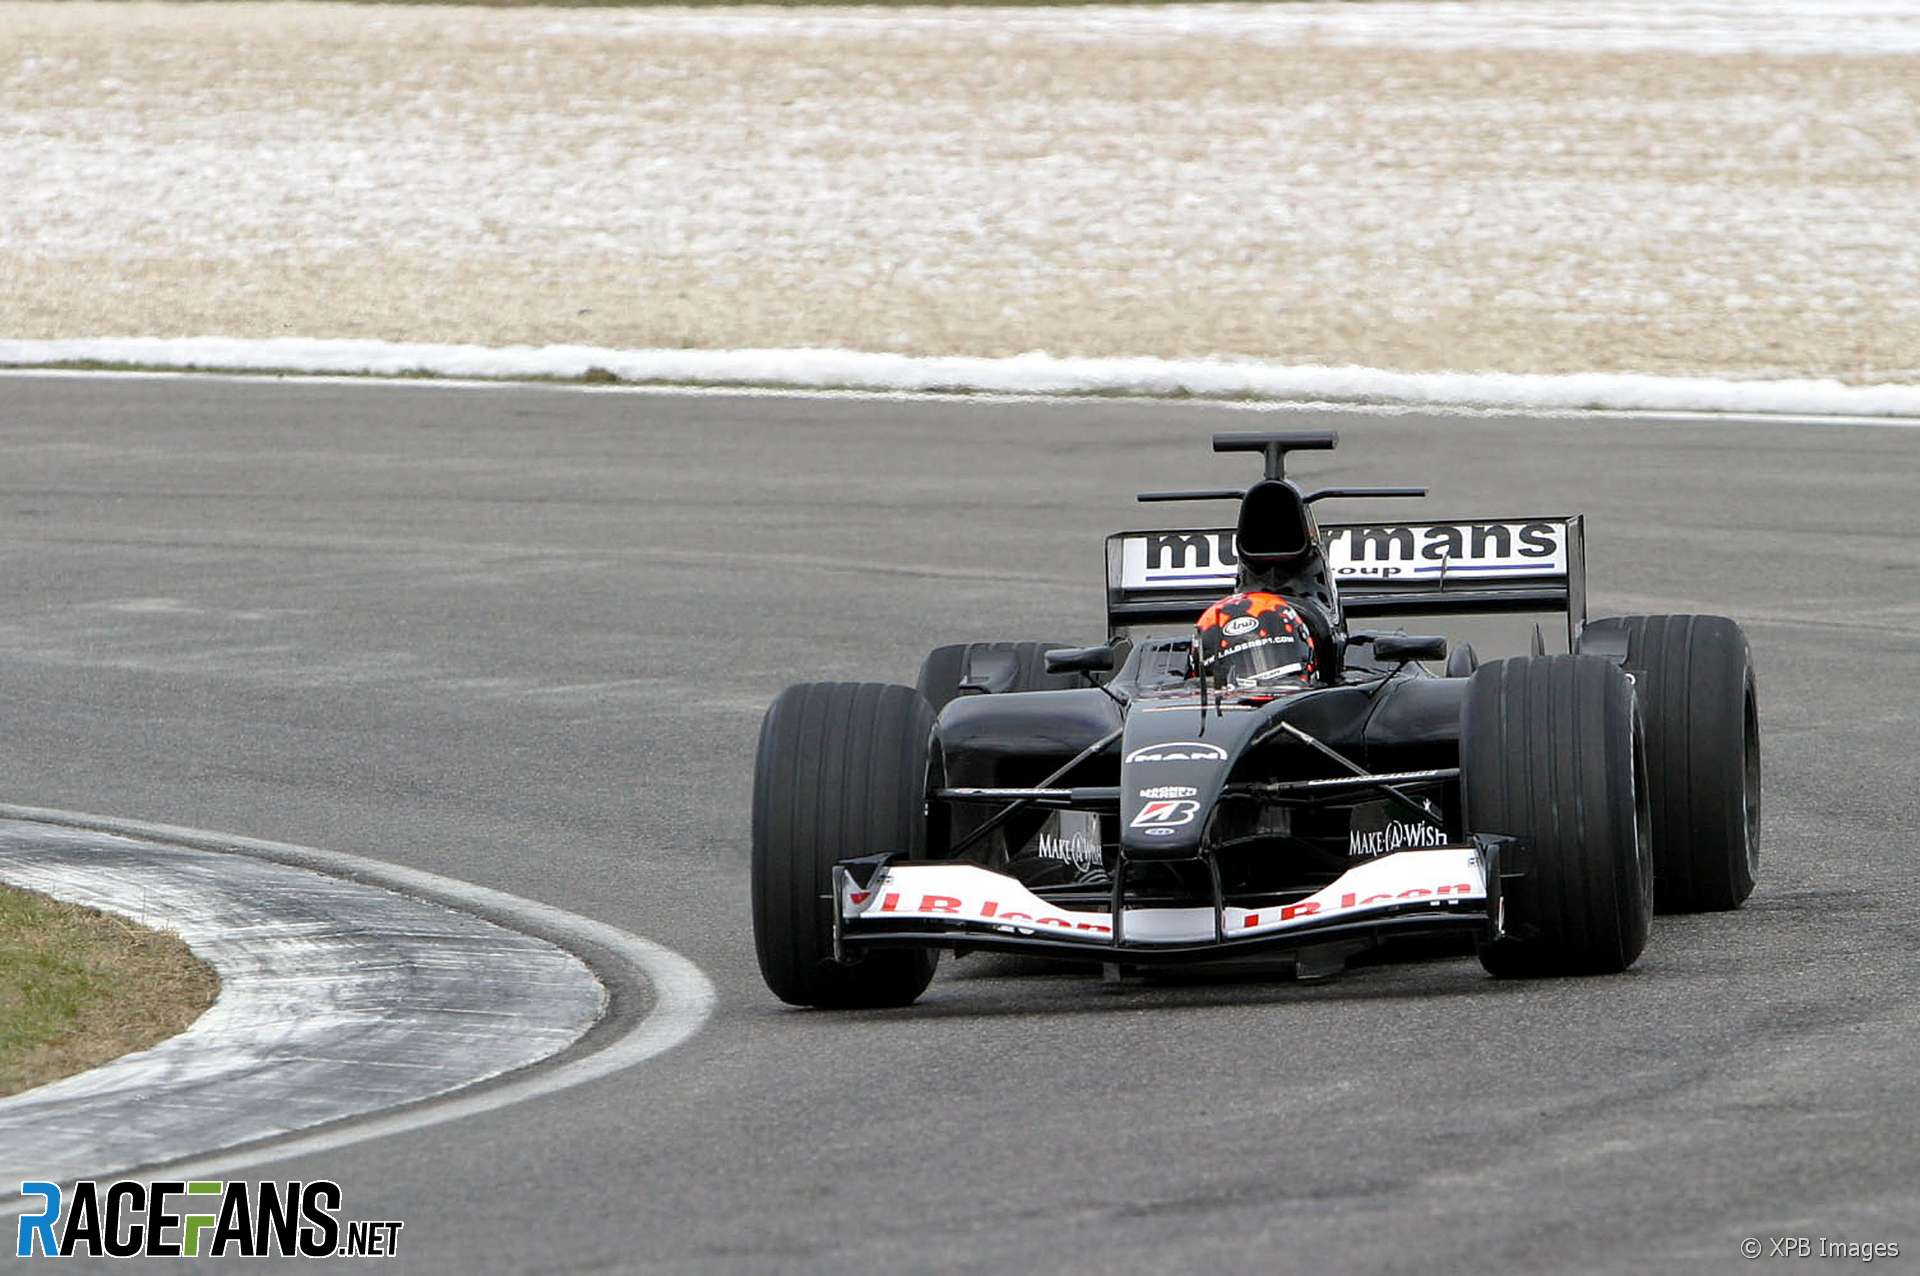 Christijan Albers, Minardi, Misano, 2005